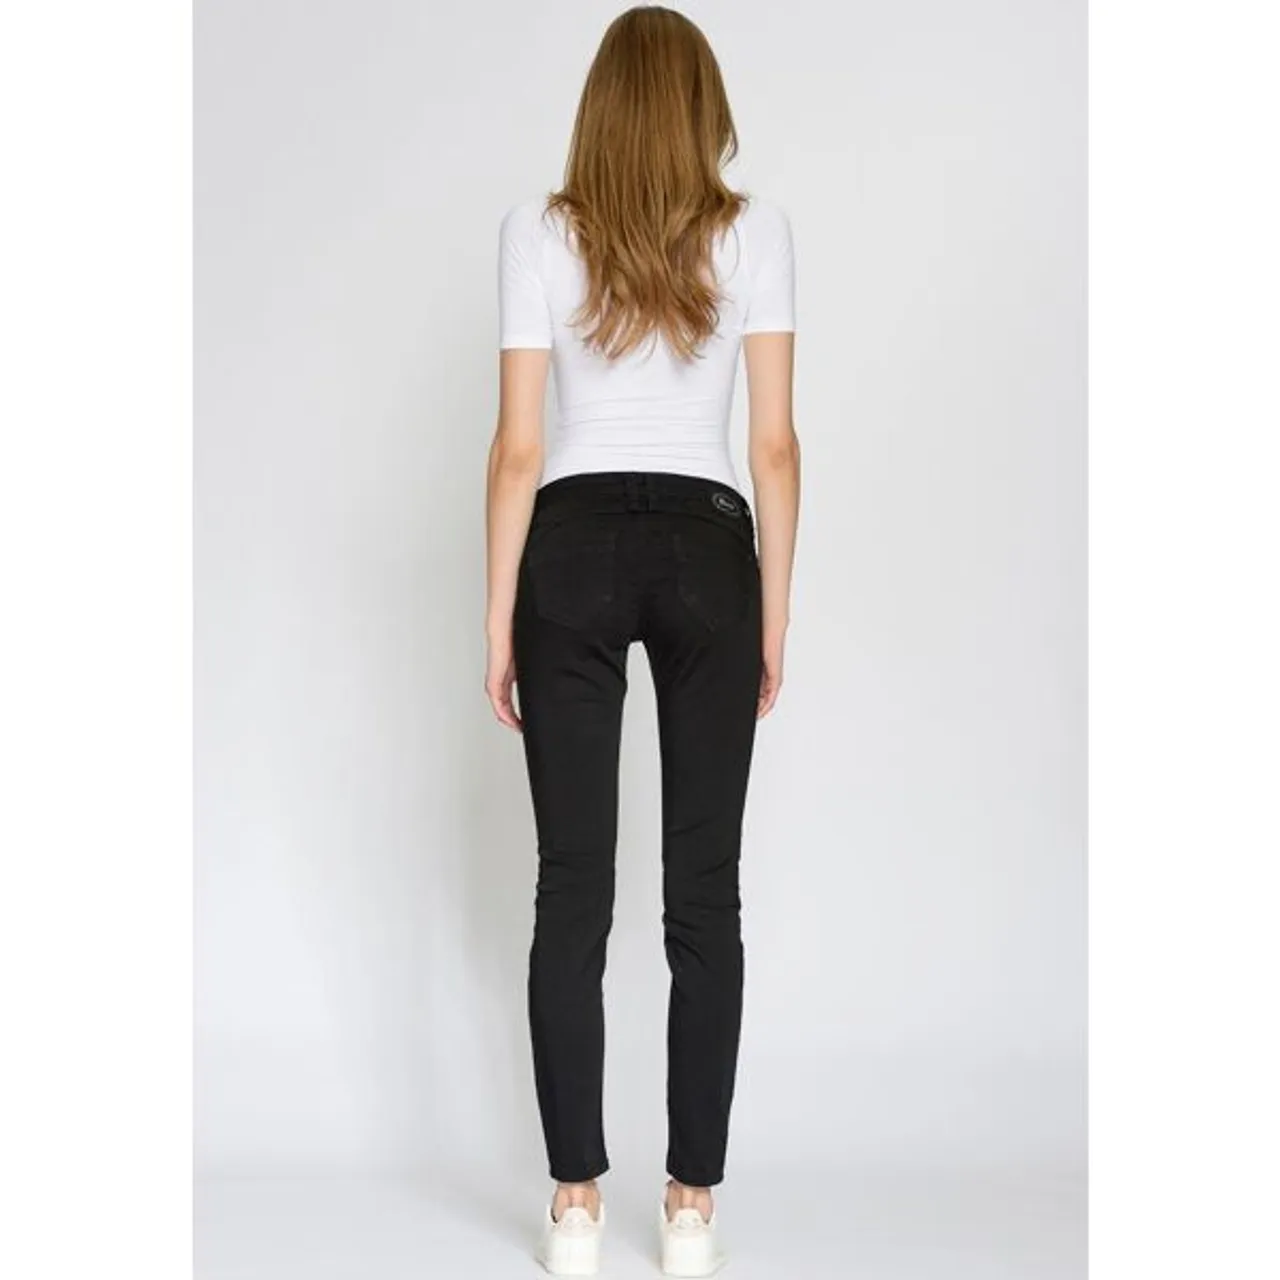 Skinny-fit-Jeans GANG "94NENA" Gr. 33 (42), N-Gr, schwarz (black) Damen Jeans Röhrenjeans mit modischer Waschung